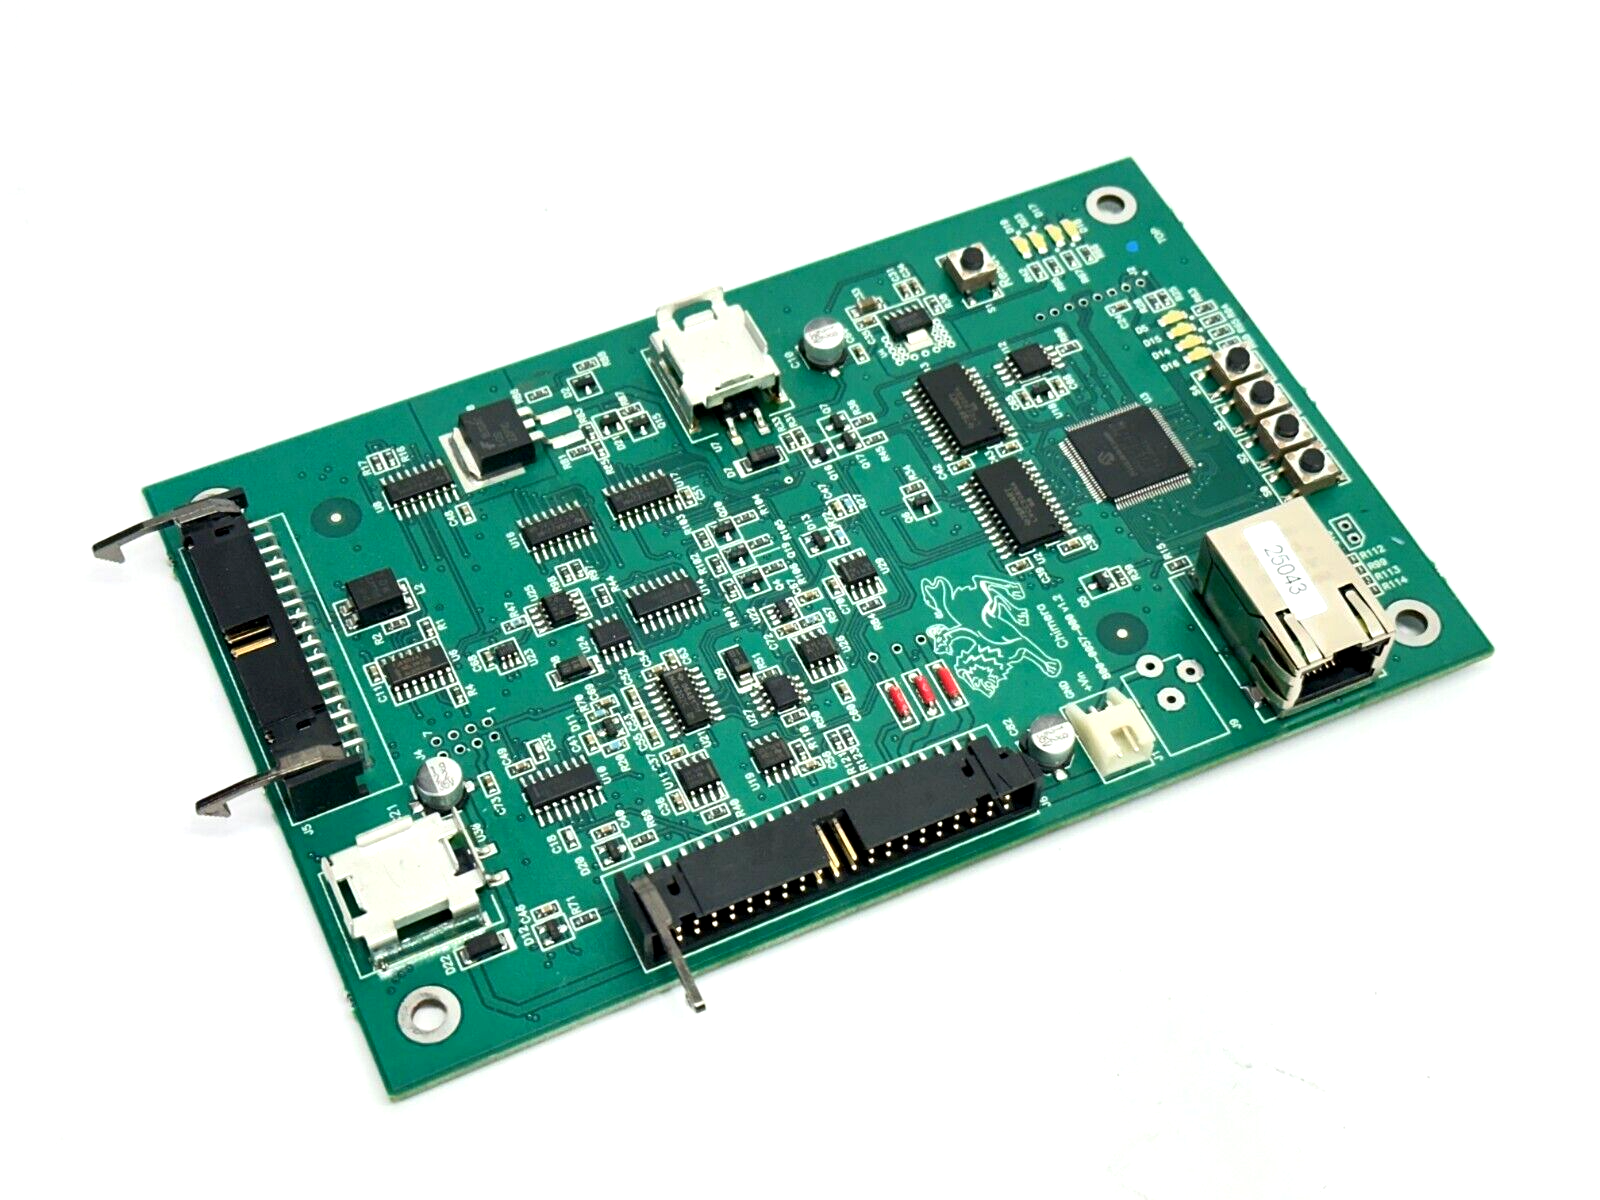 Chimera 800-0057-000 V1.2 Motherboard PCB